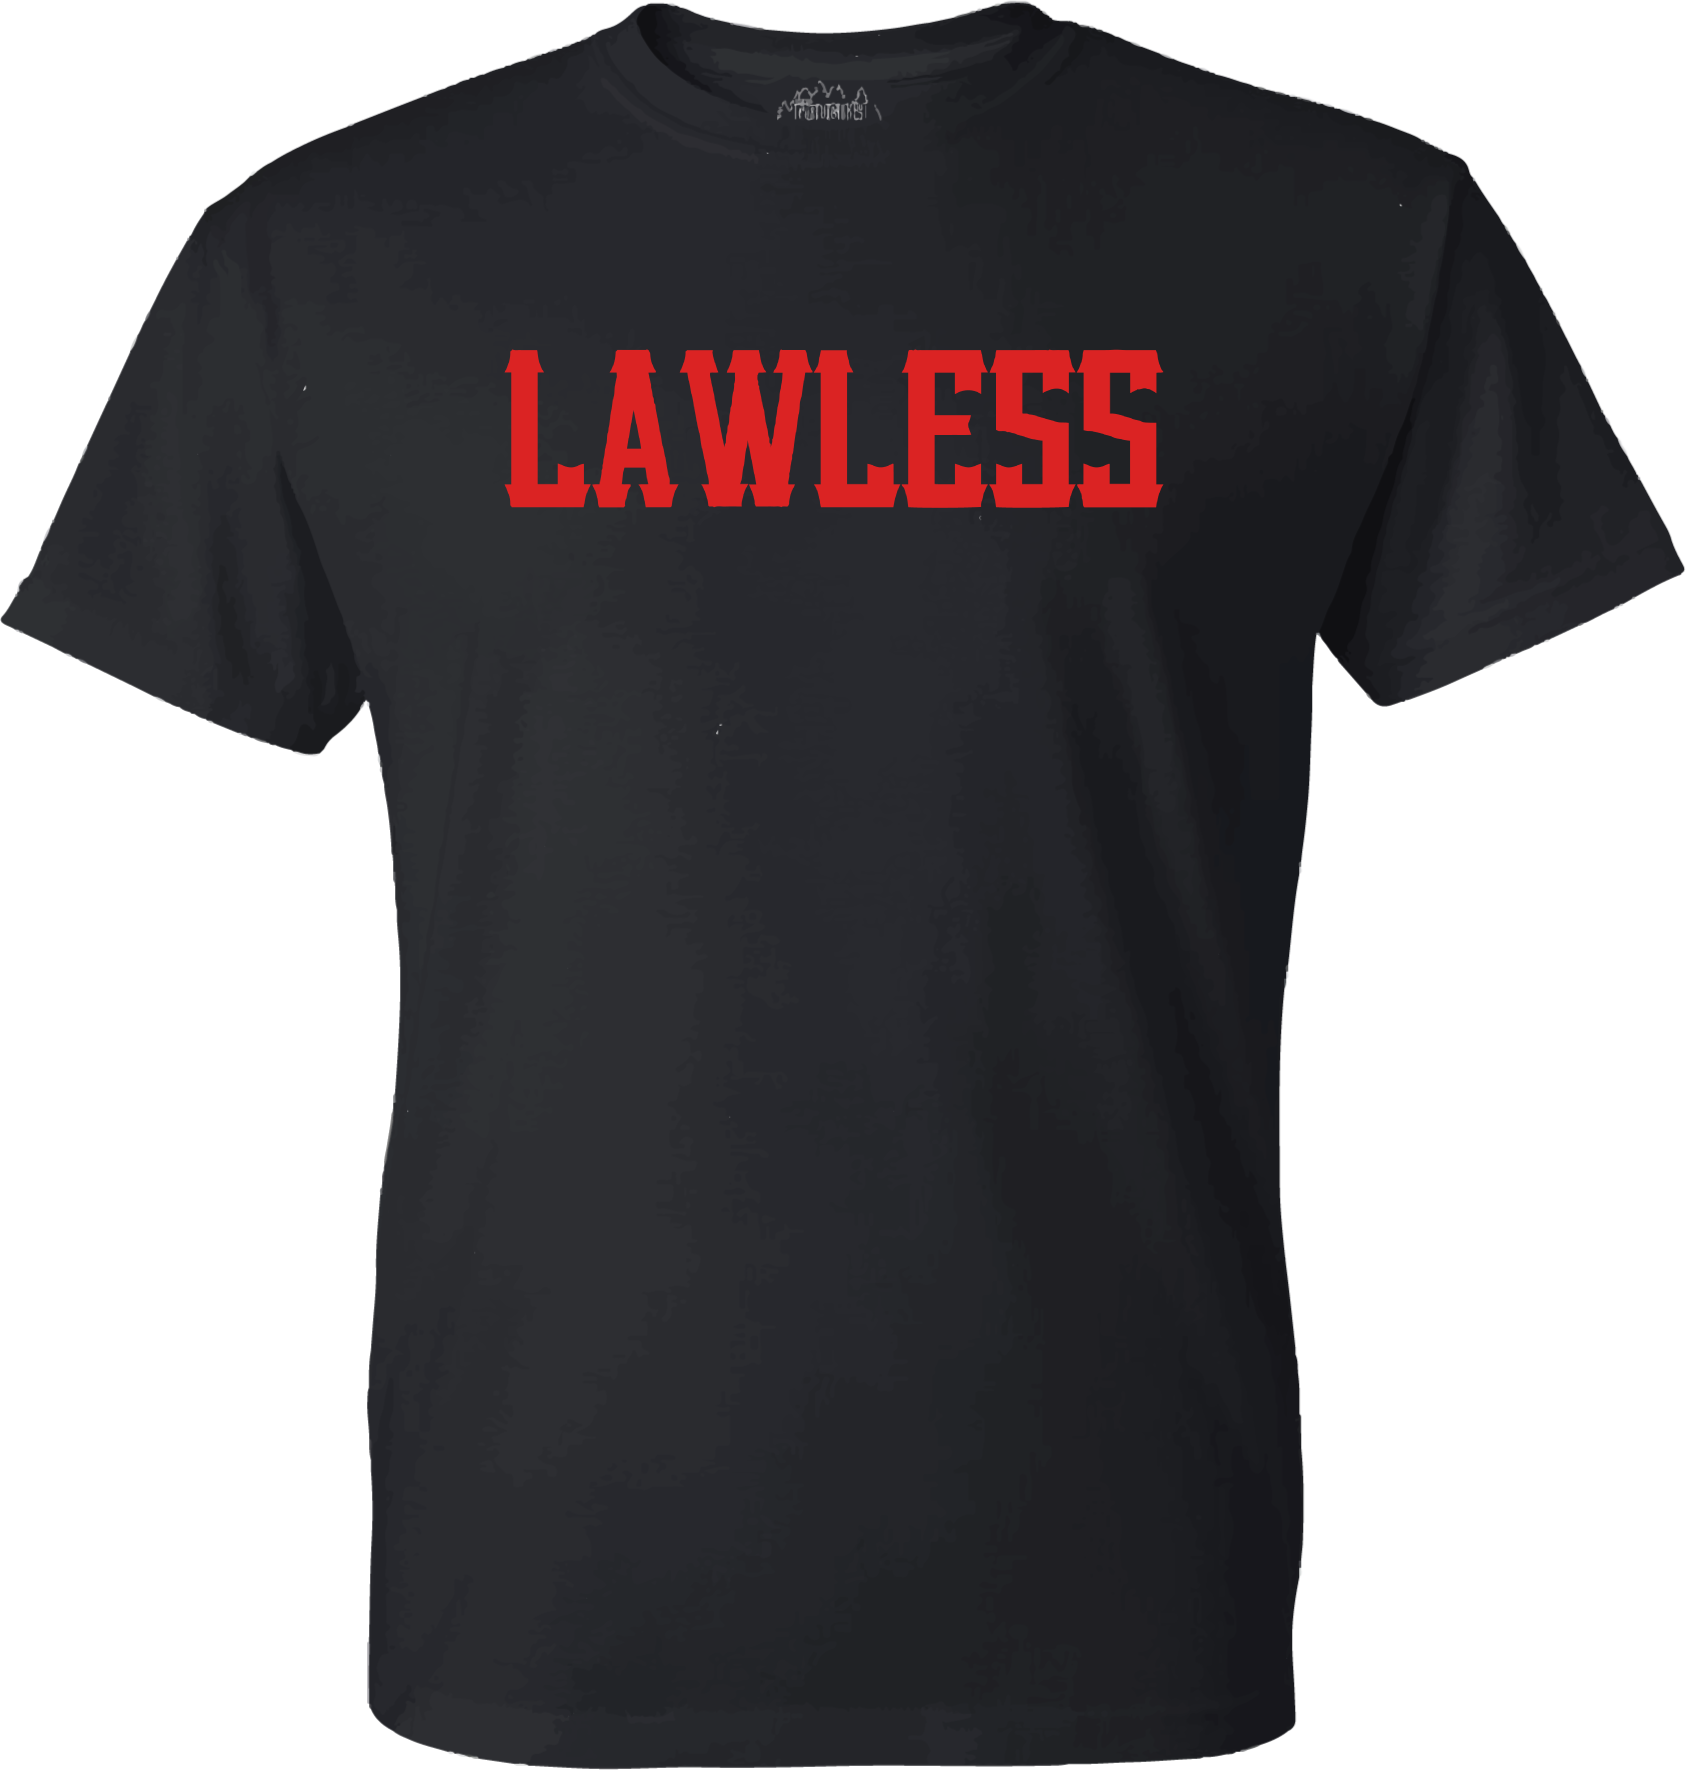 T-Shirt : LAWLESS